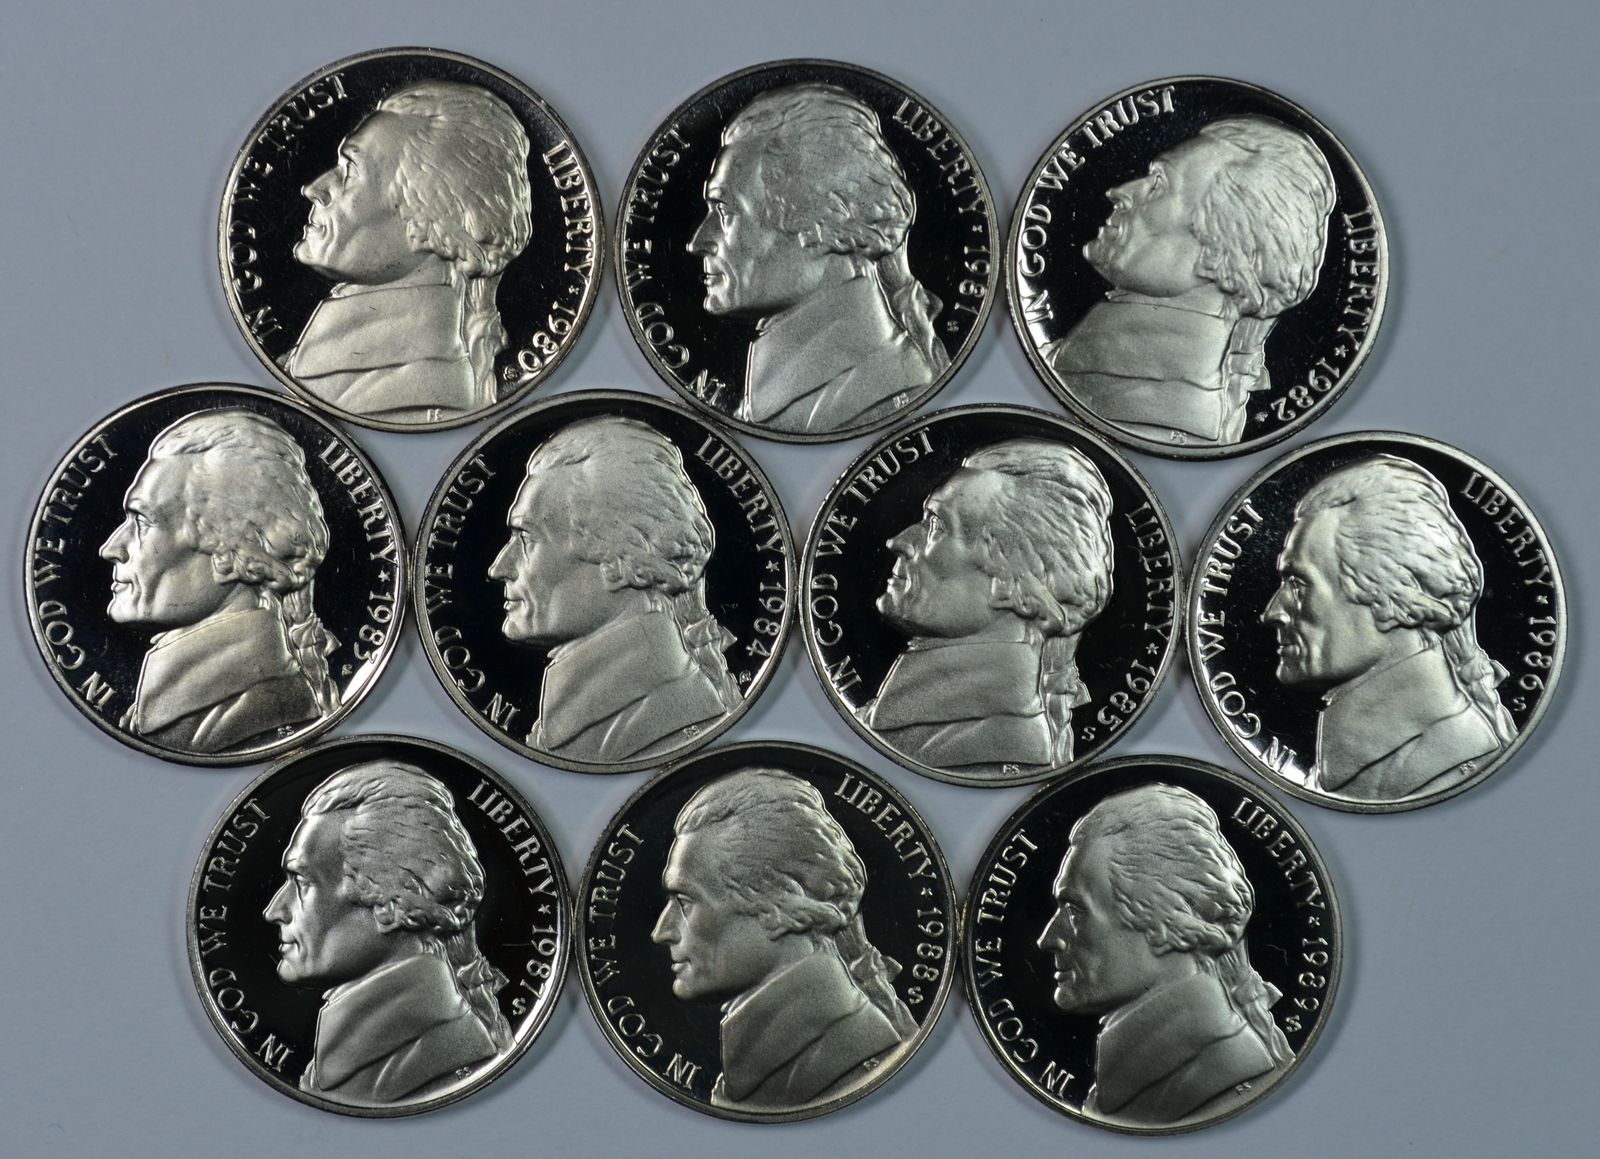 1980 - 1989 S Jefferson Proof nickel set - $14.00